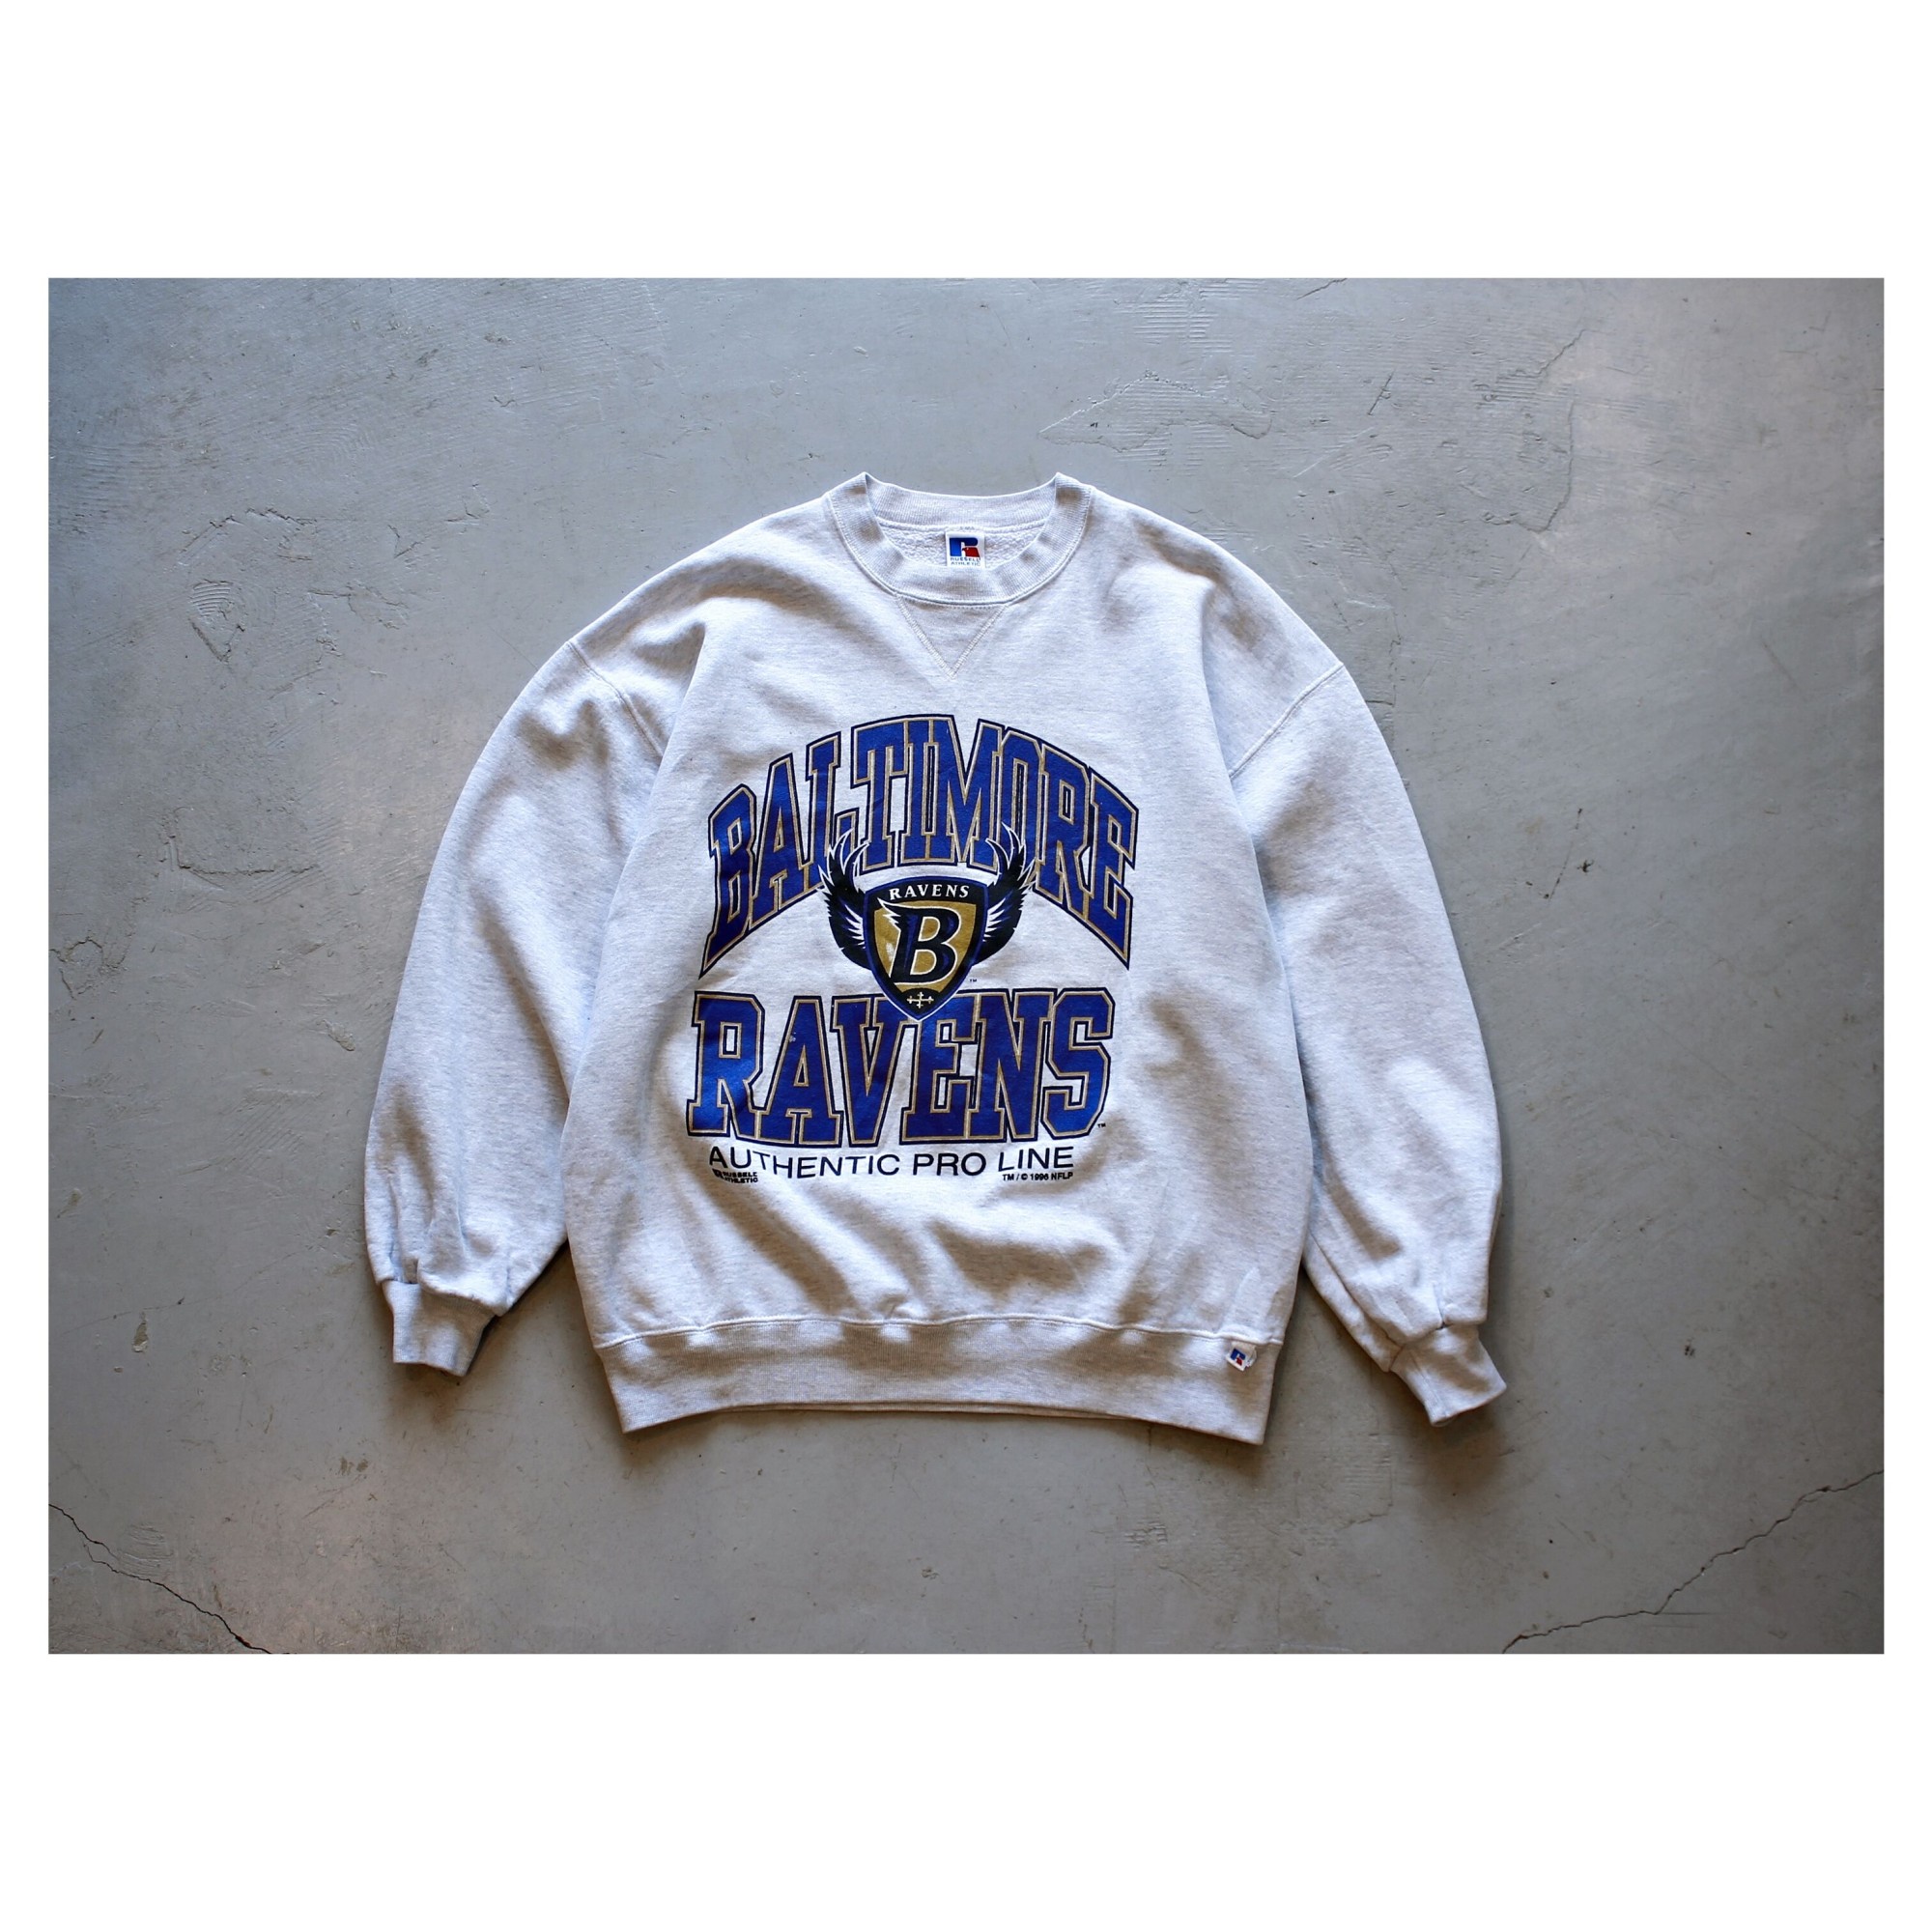 1990s NFL “Baltimore Ravens” Sweatshirt